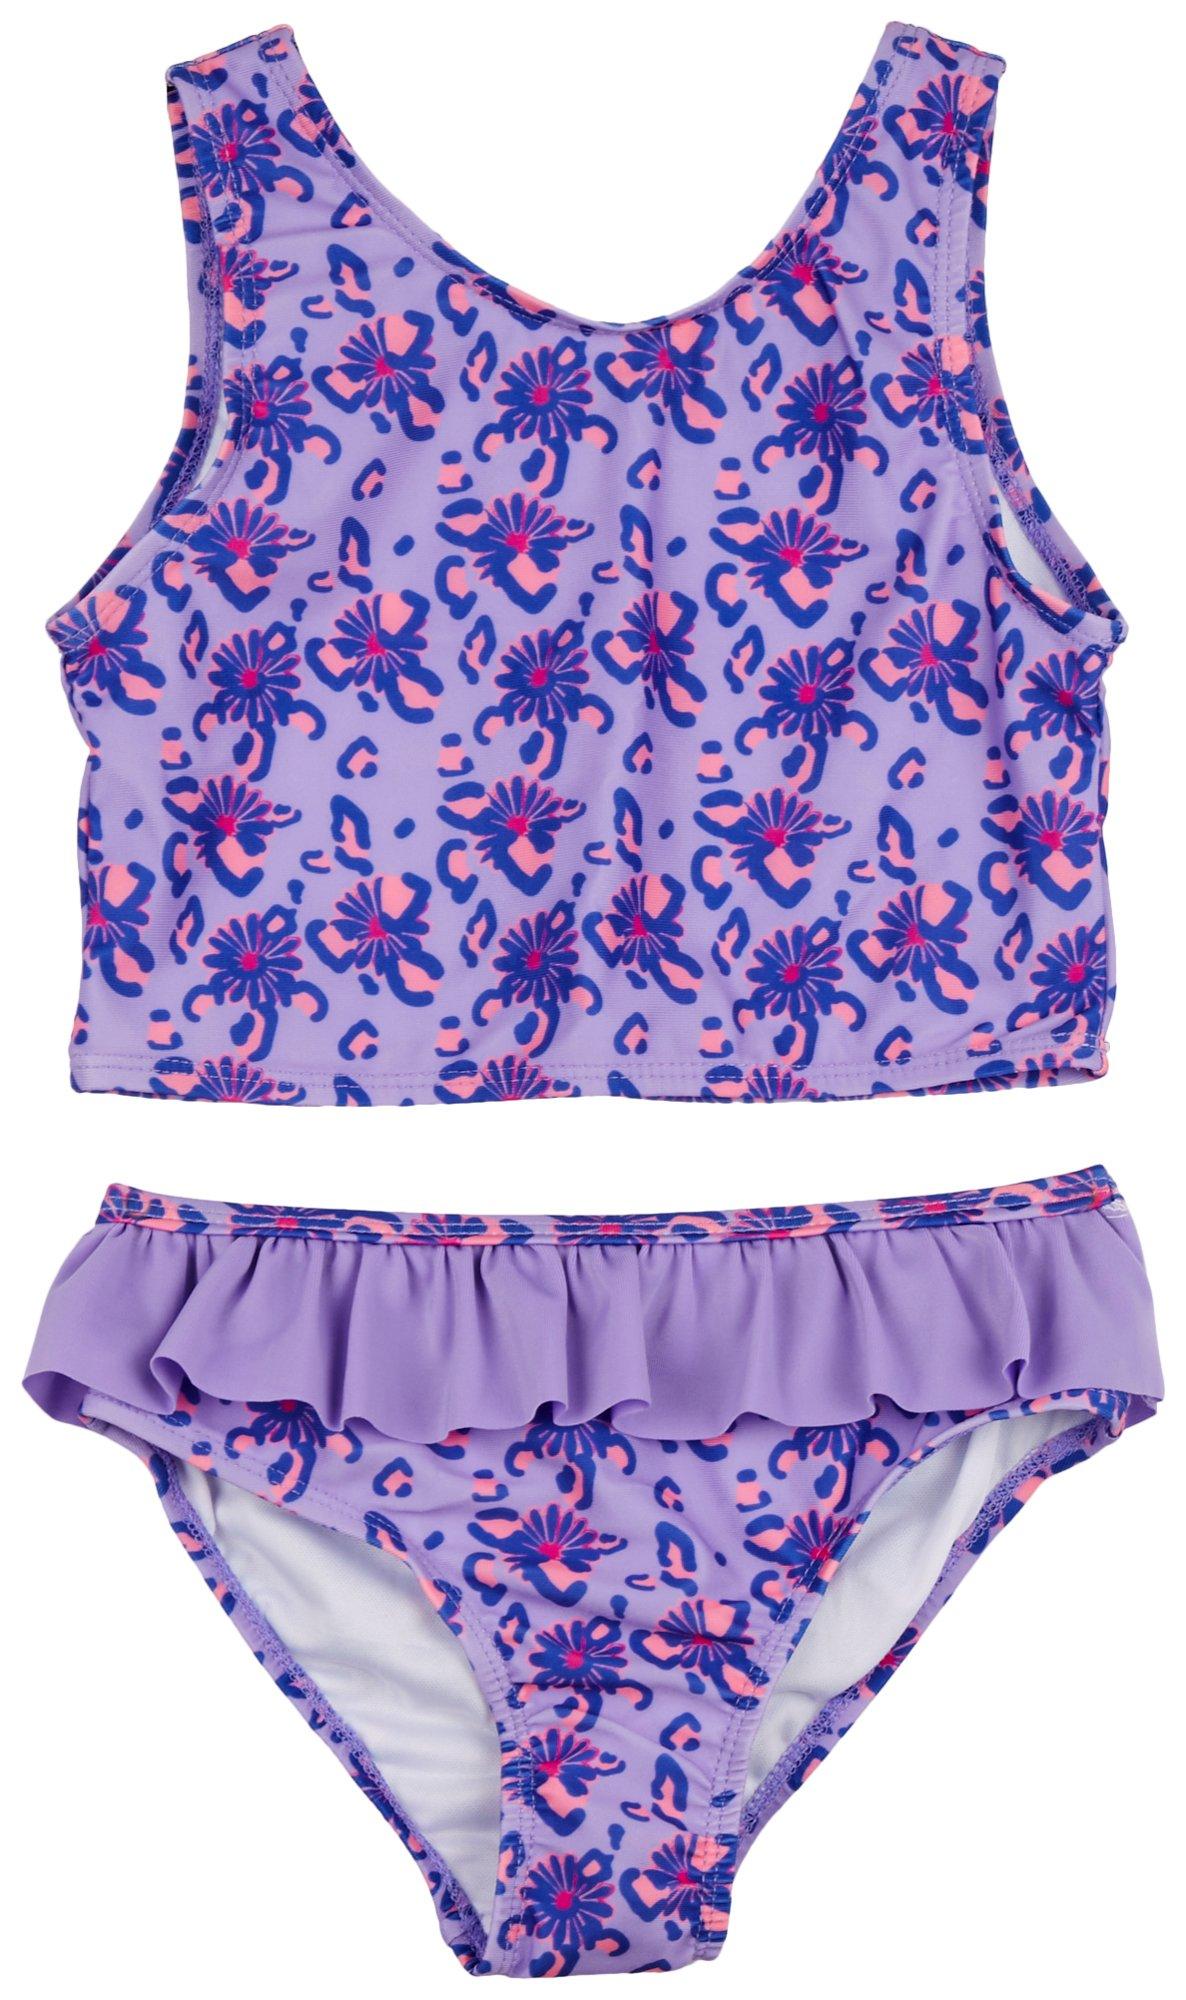 BRIGHT SKY Little Girls 2-Pc. Floral Cheetah Swimsuit Set